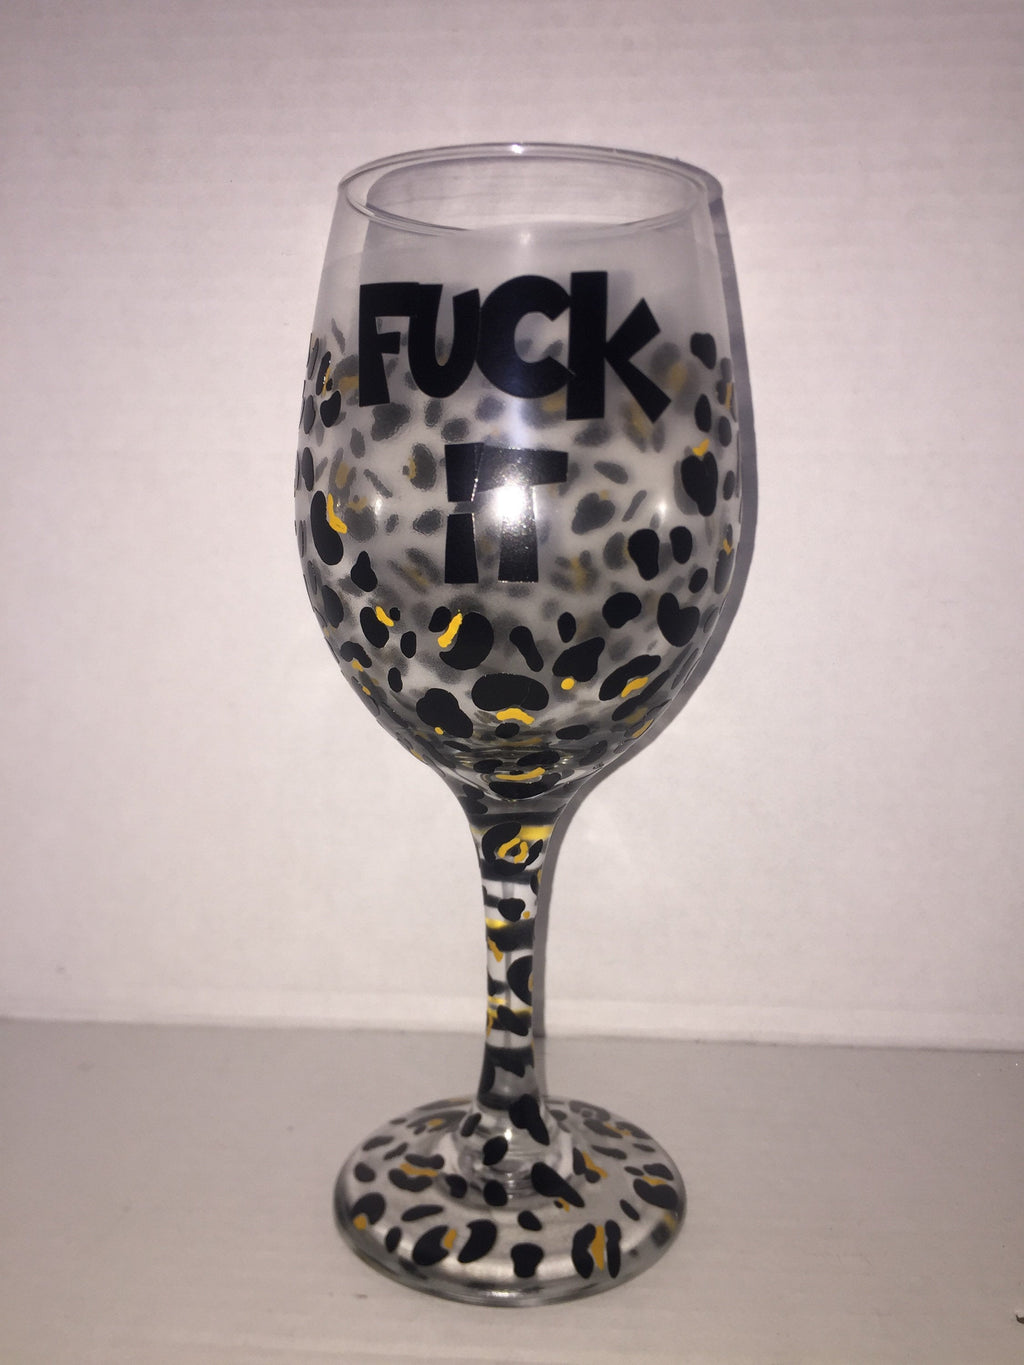 Fuck it cheetah print wine glass wine glass